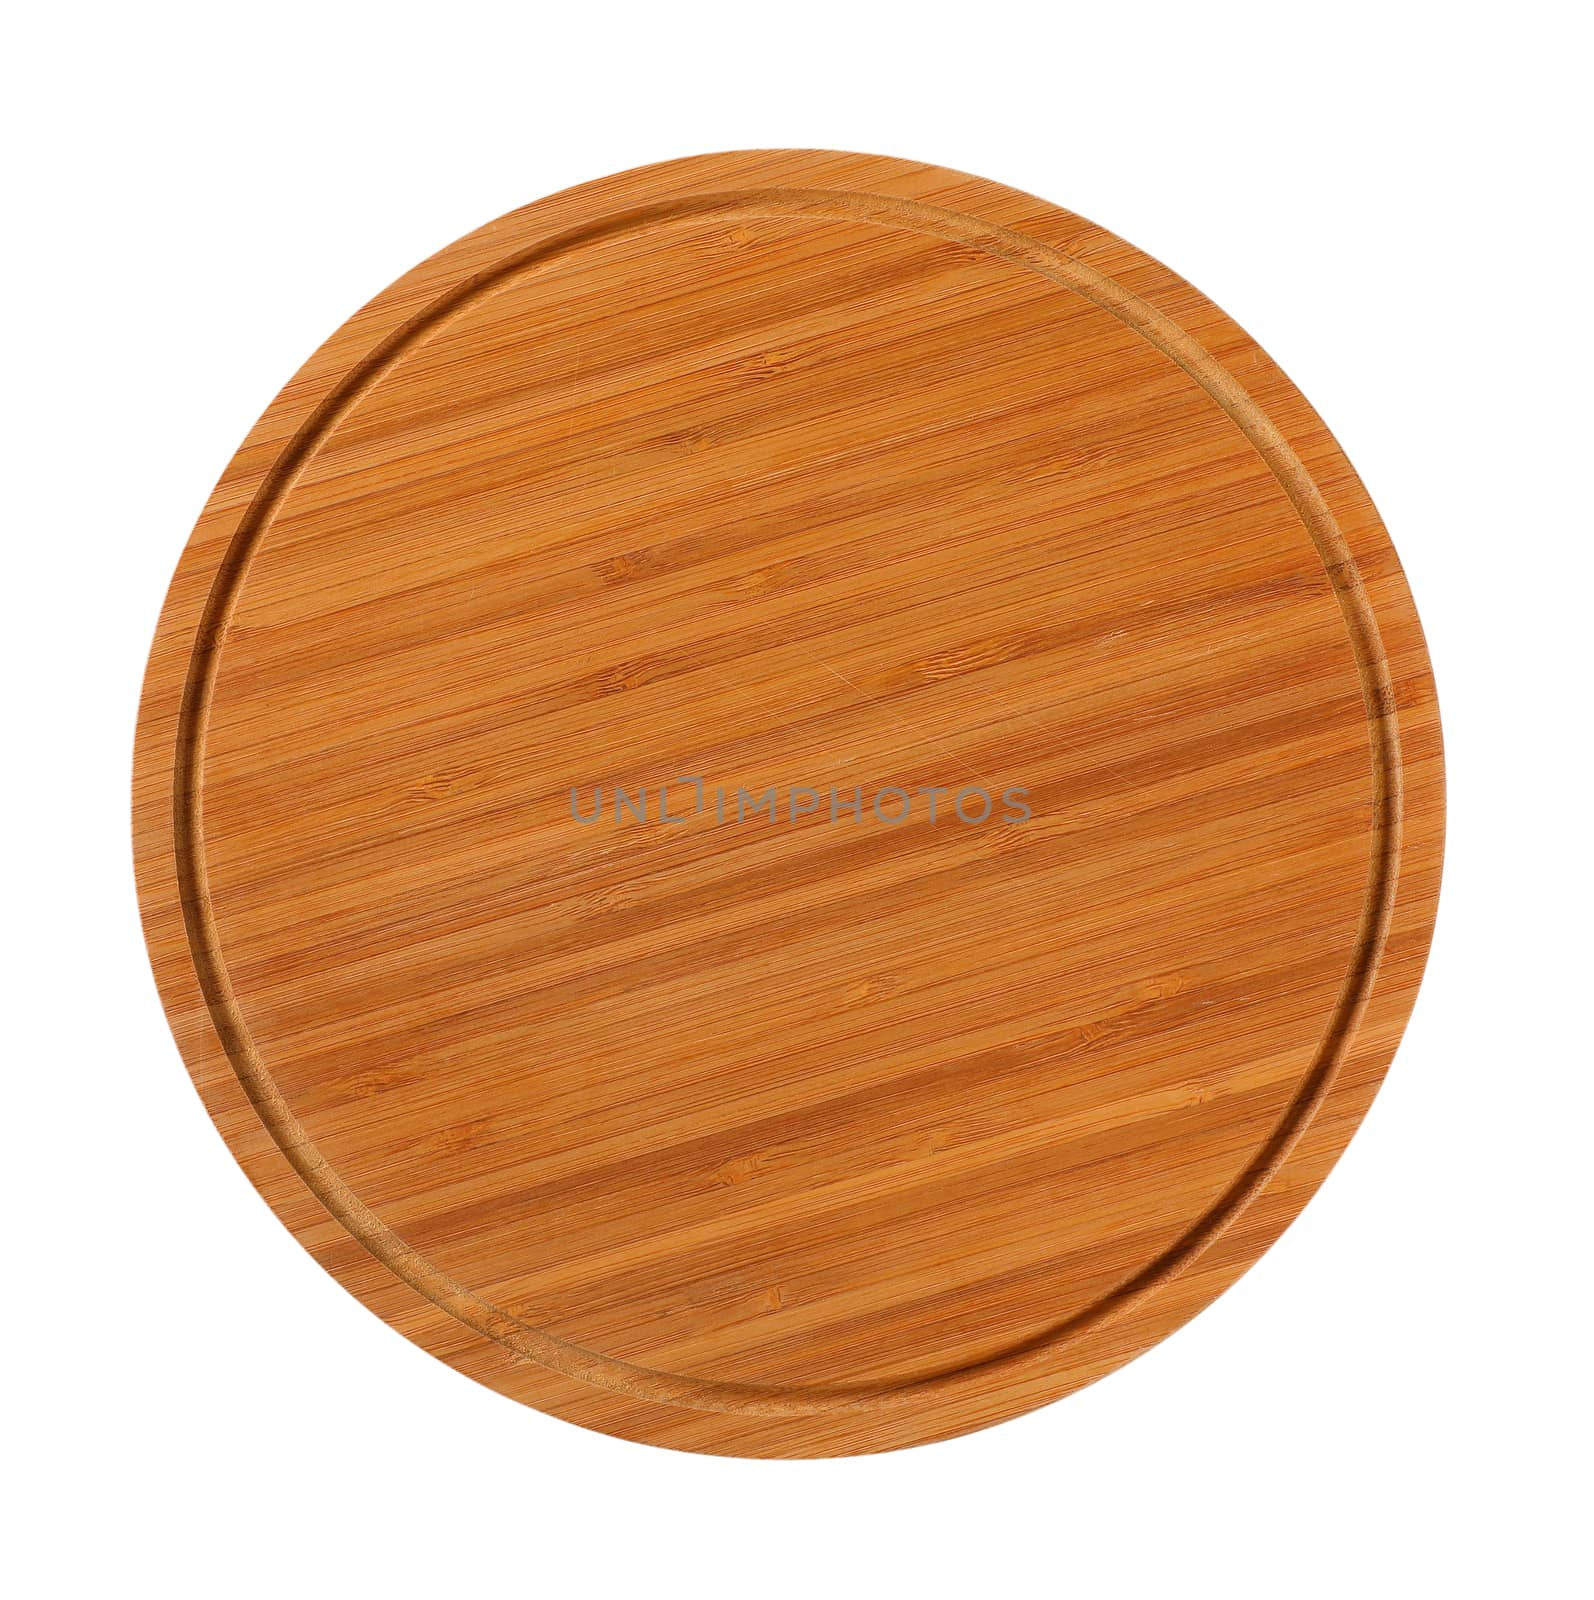 empty round wooden cutting board on white background